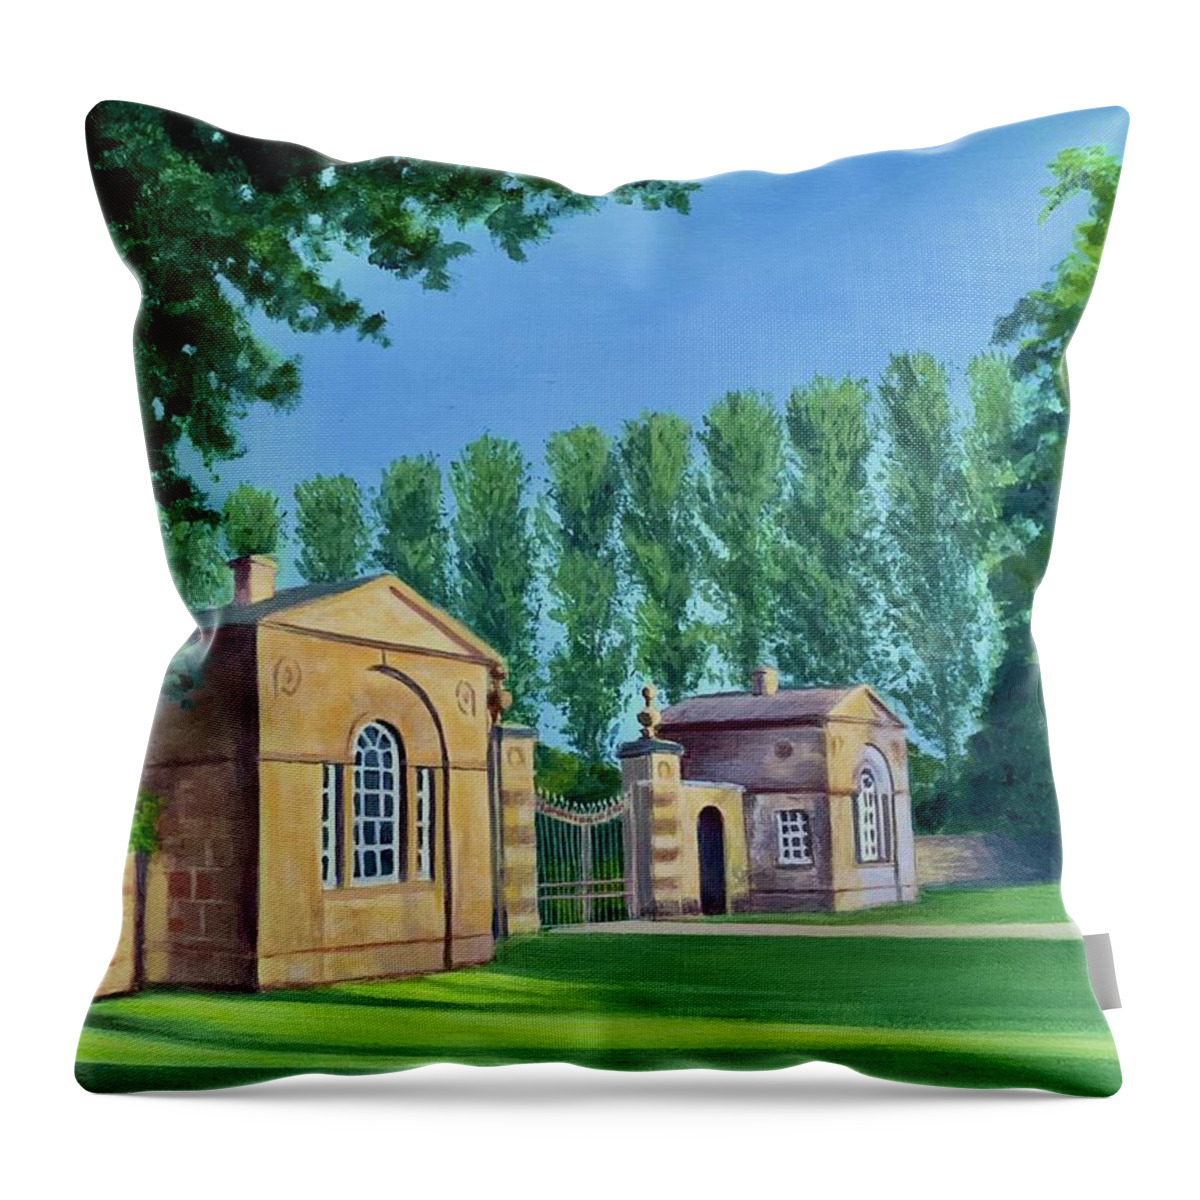 Easton Neston Lodges Throw Pillow featuring the painting Easton Neston Lodges by Caroline Swan